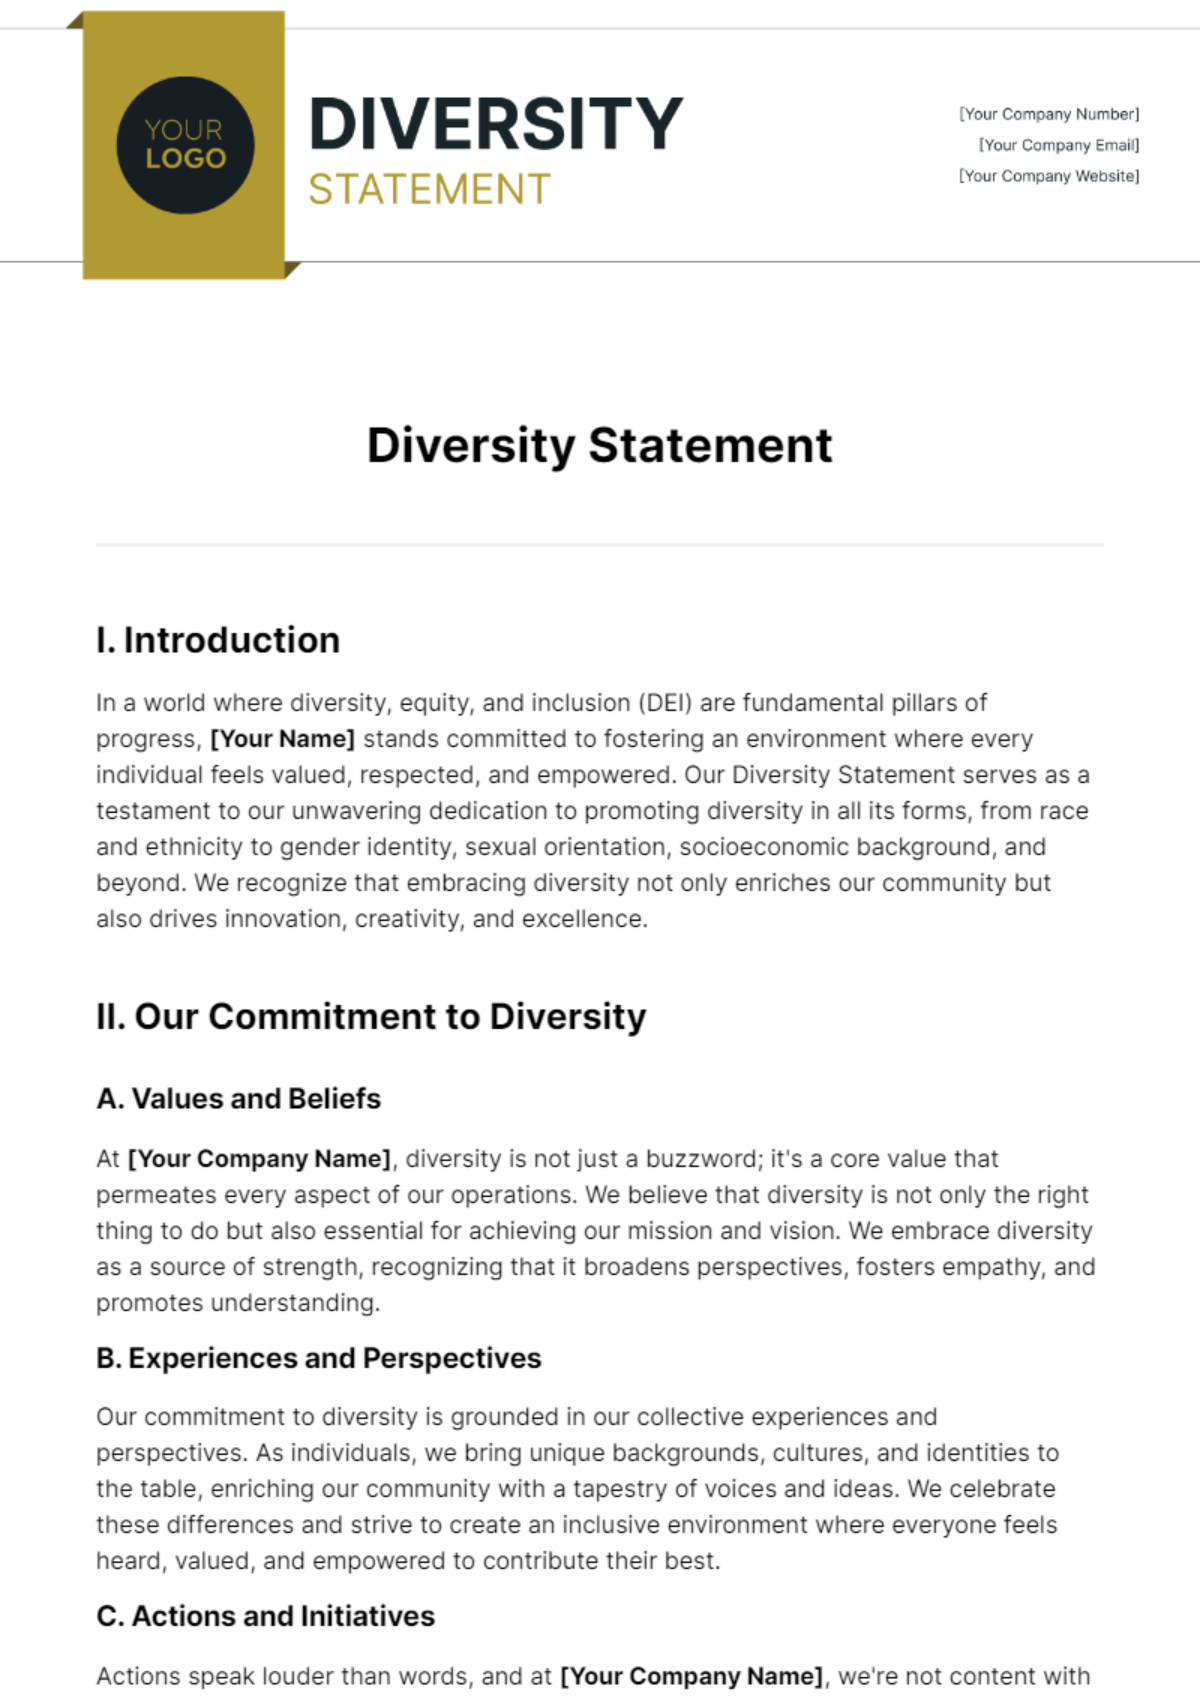 Diversity Statement Template